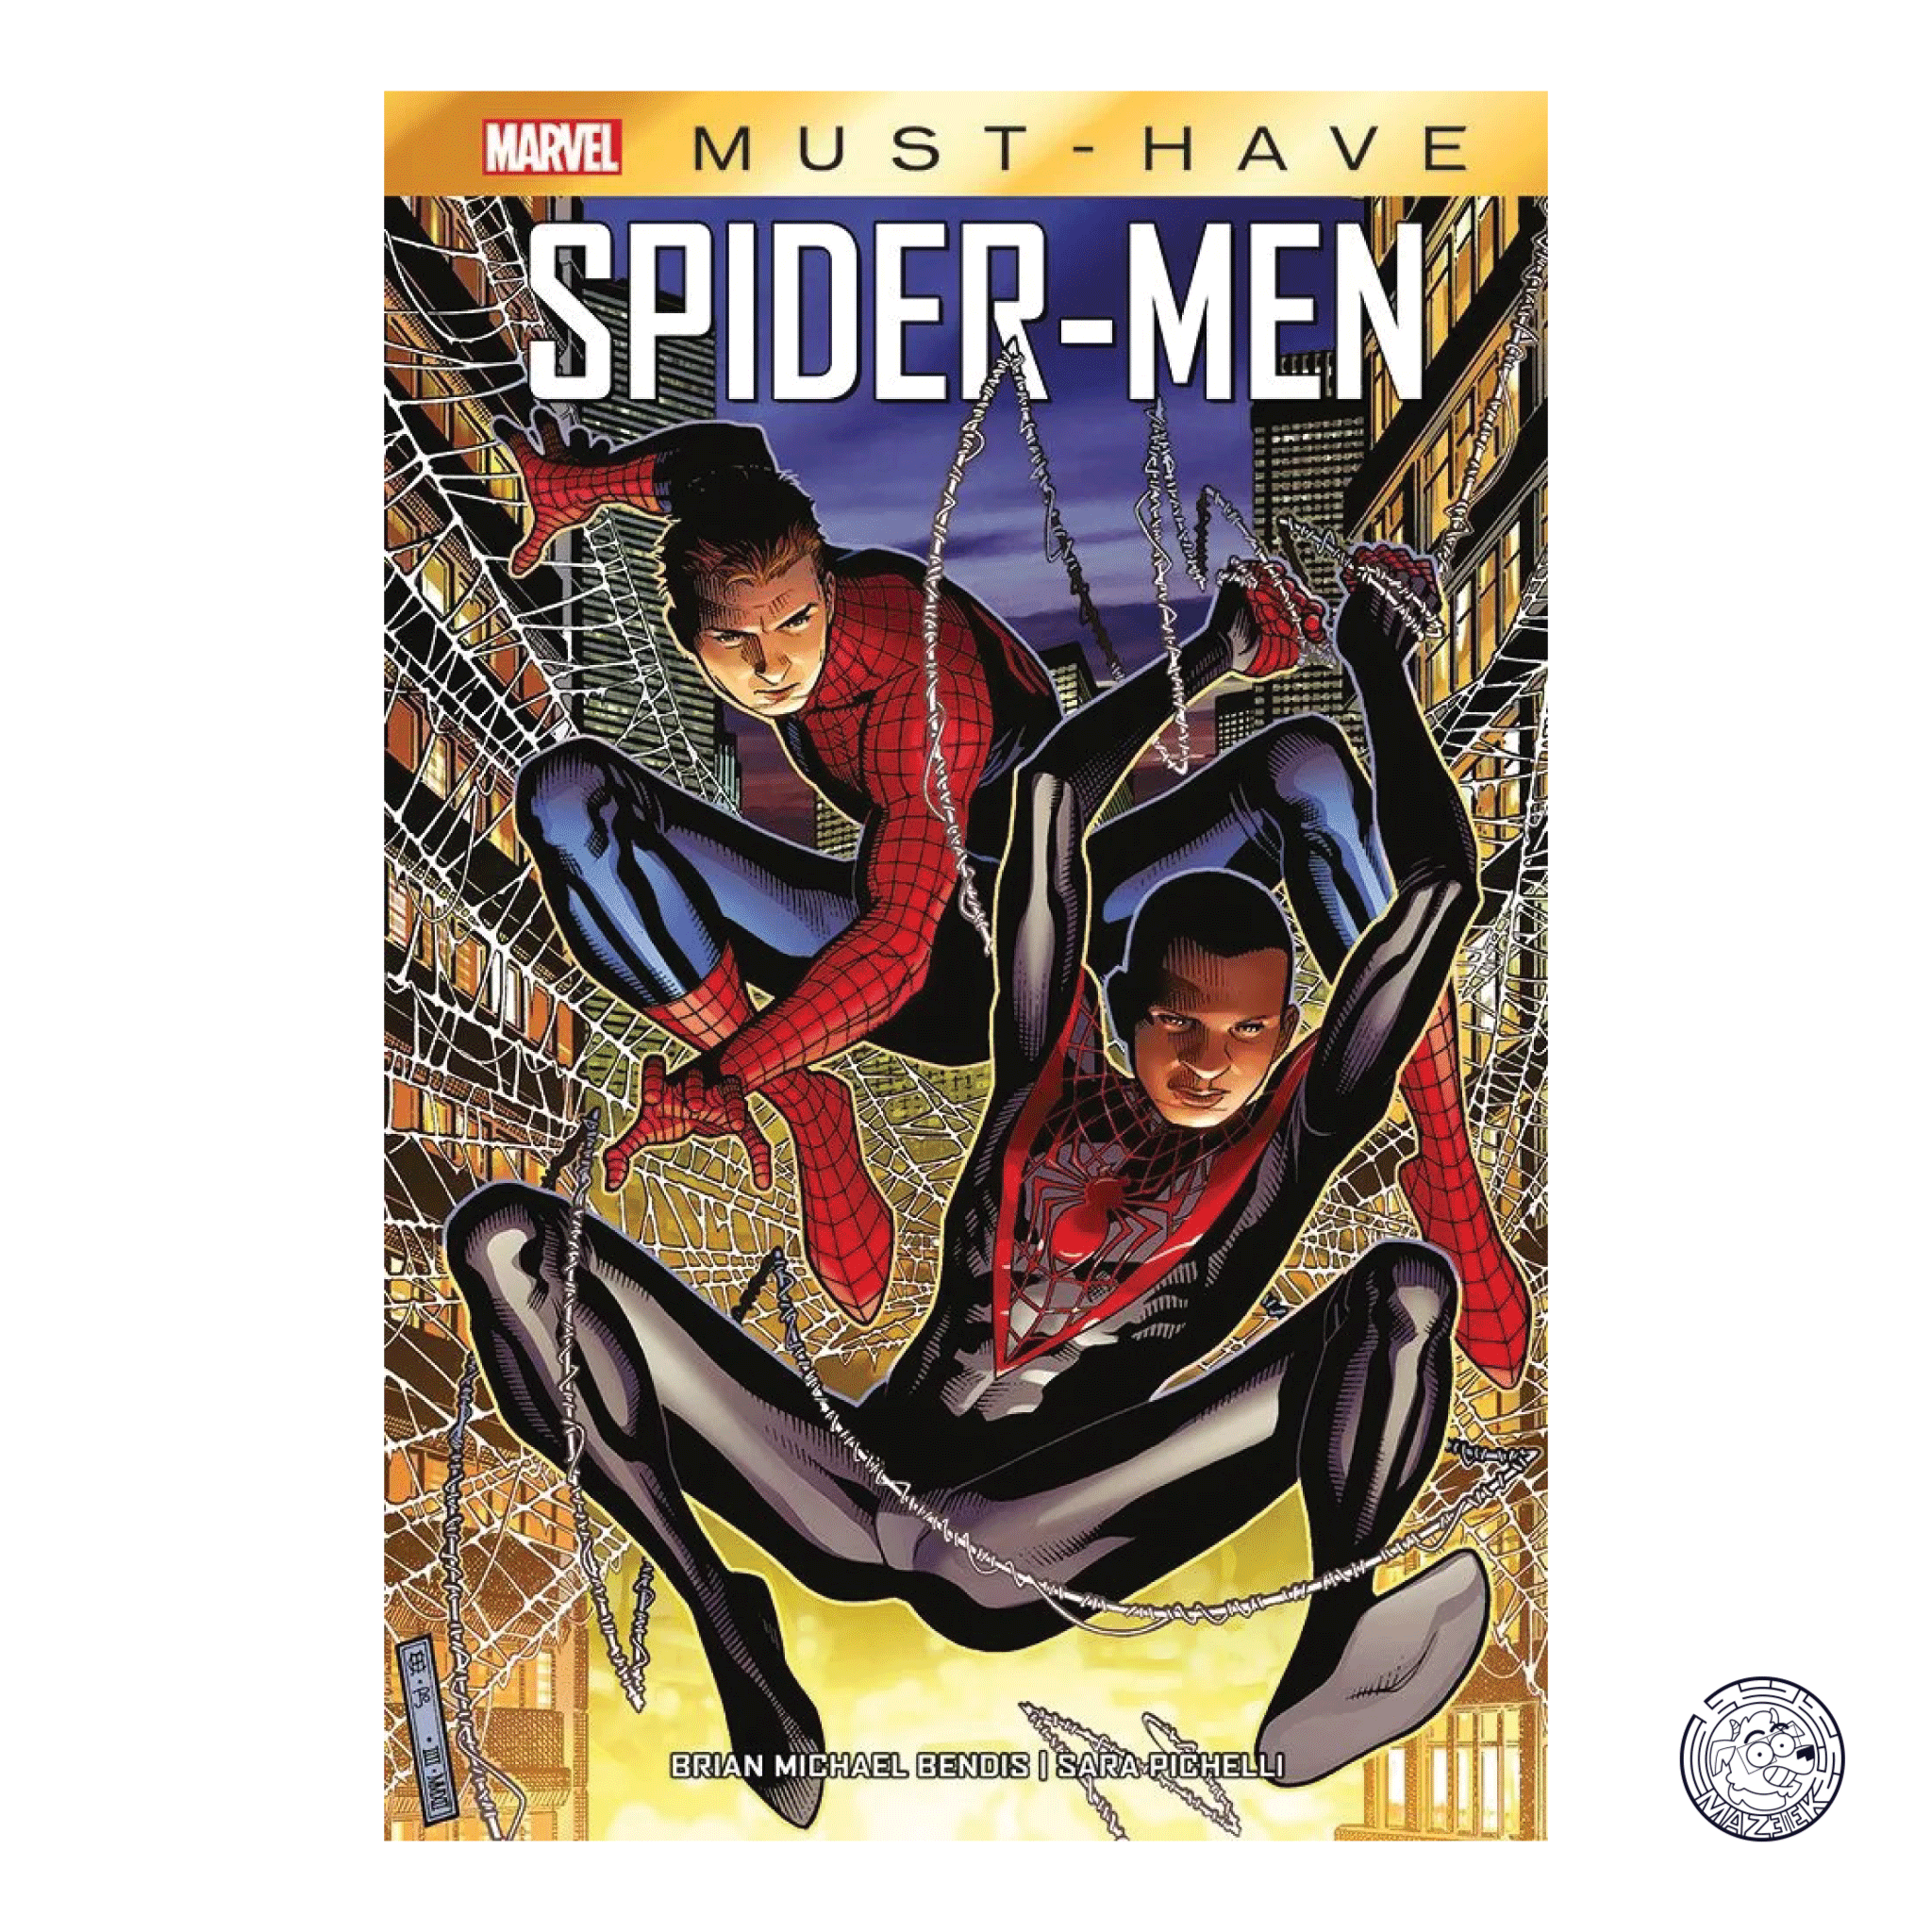 Marvel Must Have - Spider-Men: I Mondi Collidono